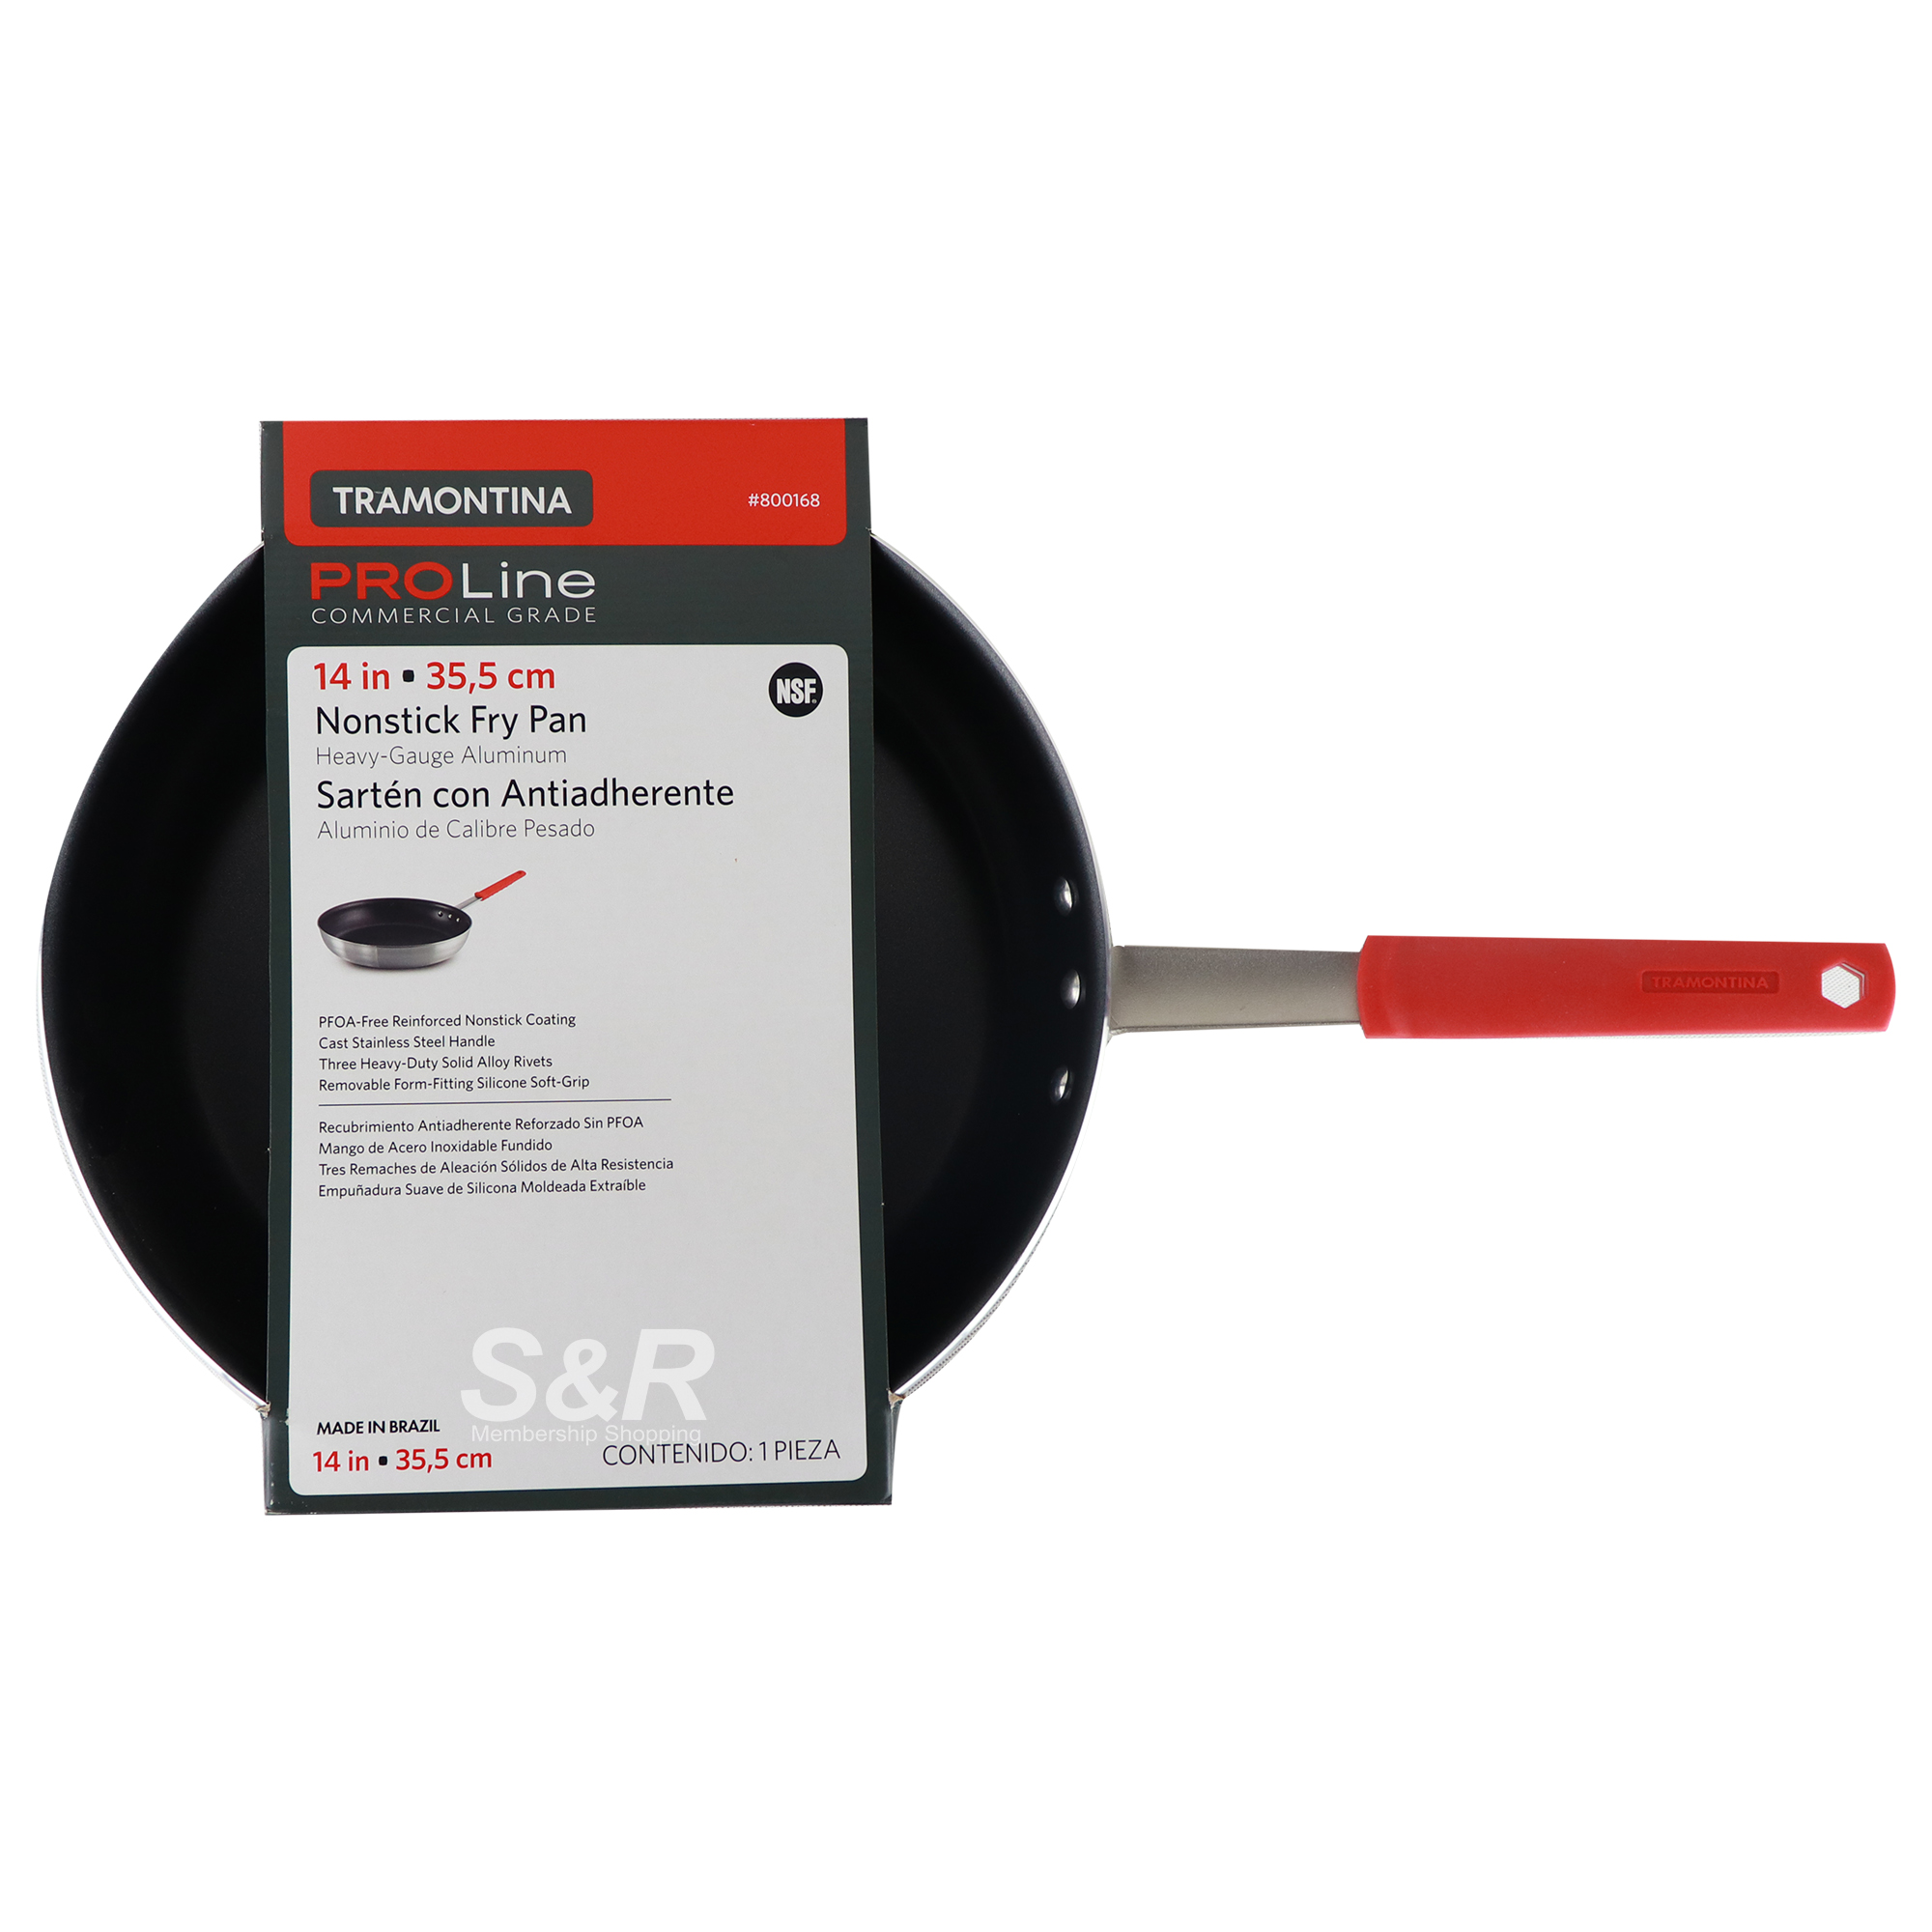 Tramontina ProLine Commercial Grade Nonstick Fry Pan 14-inch